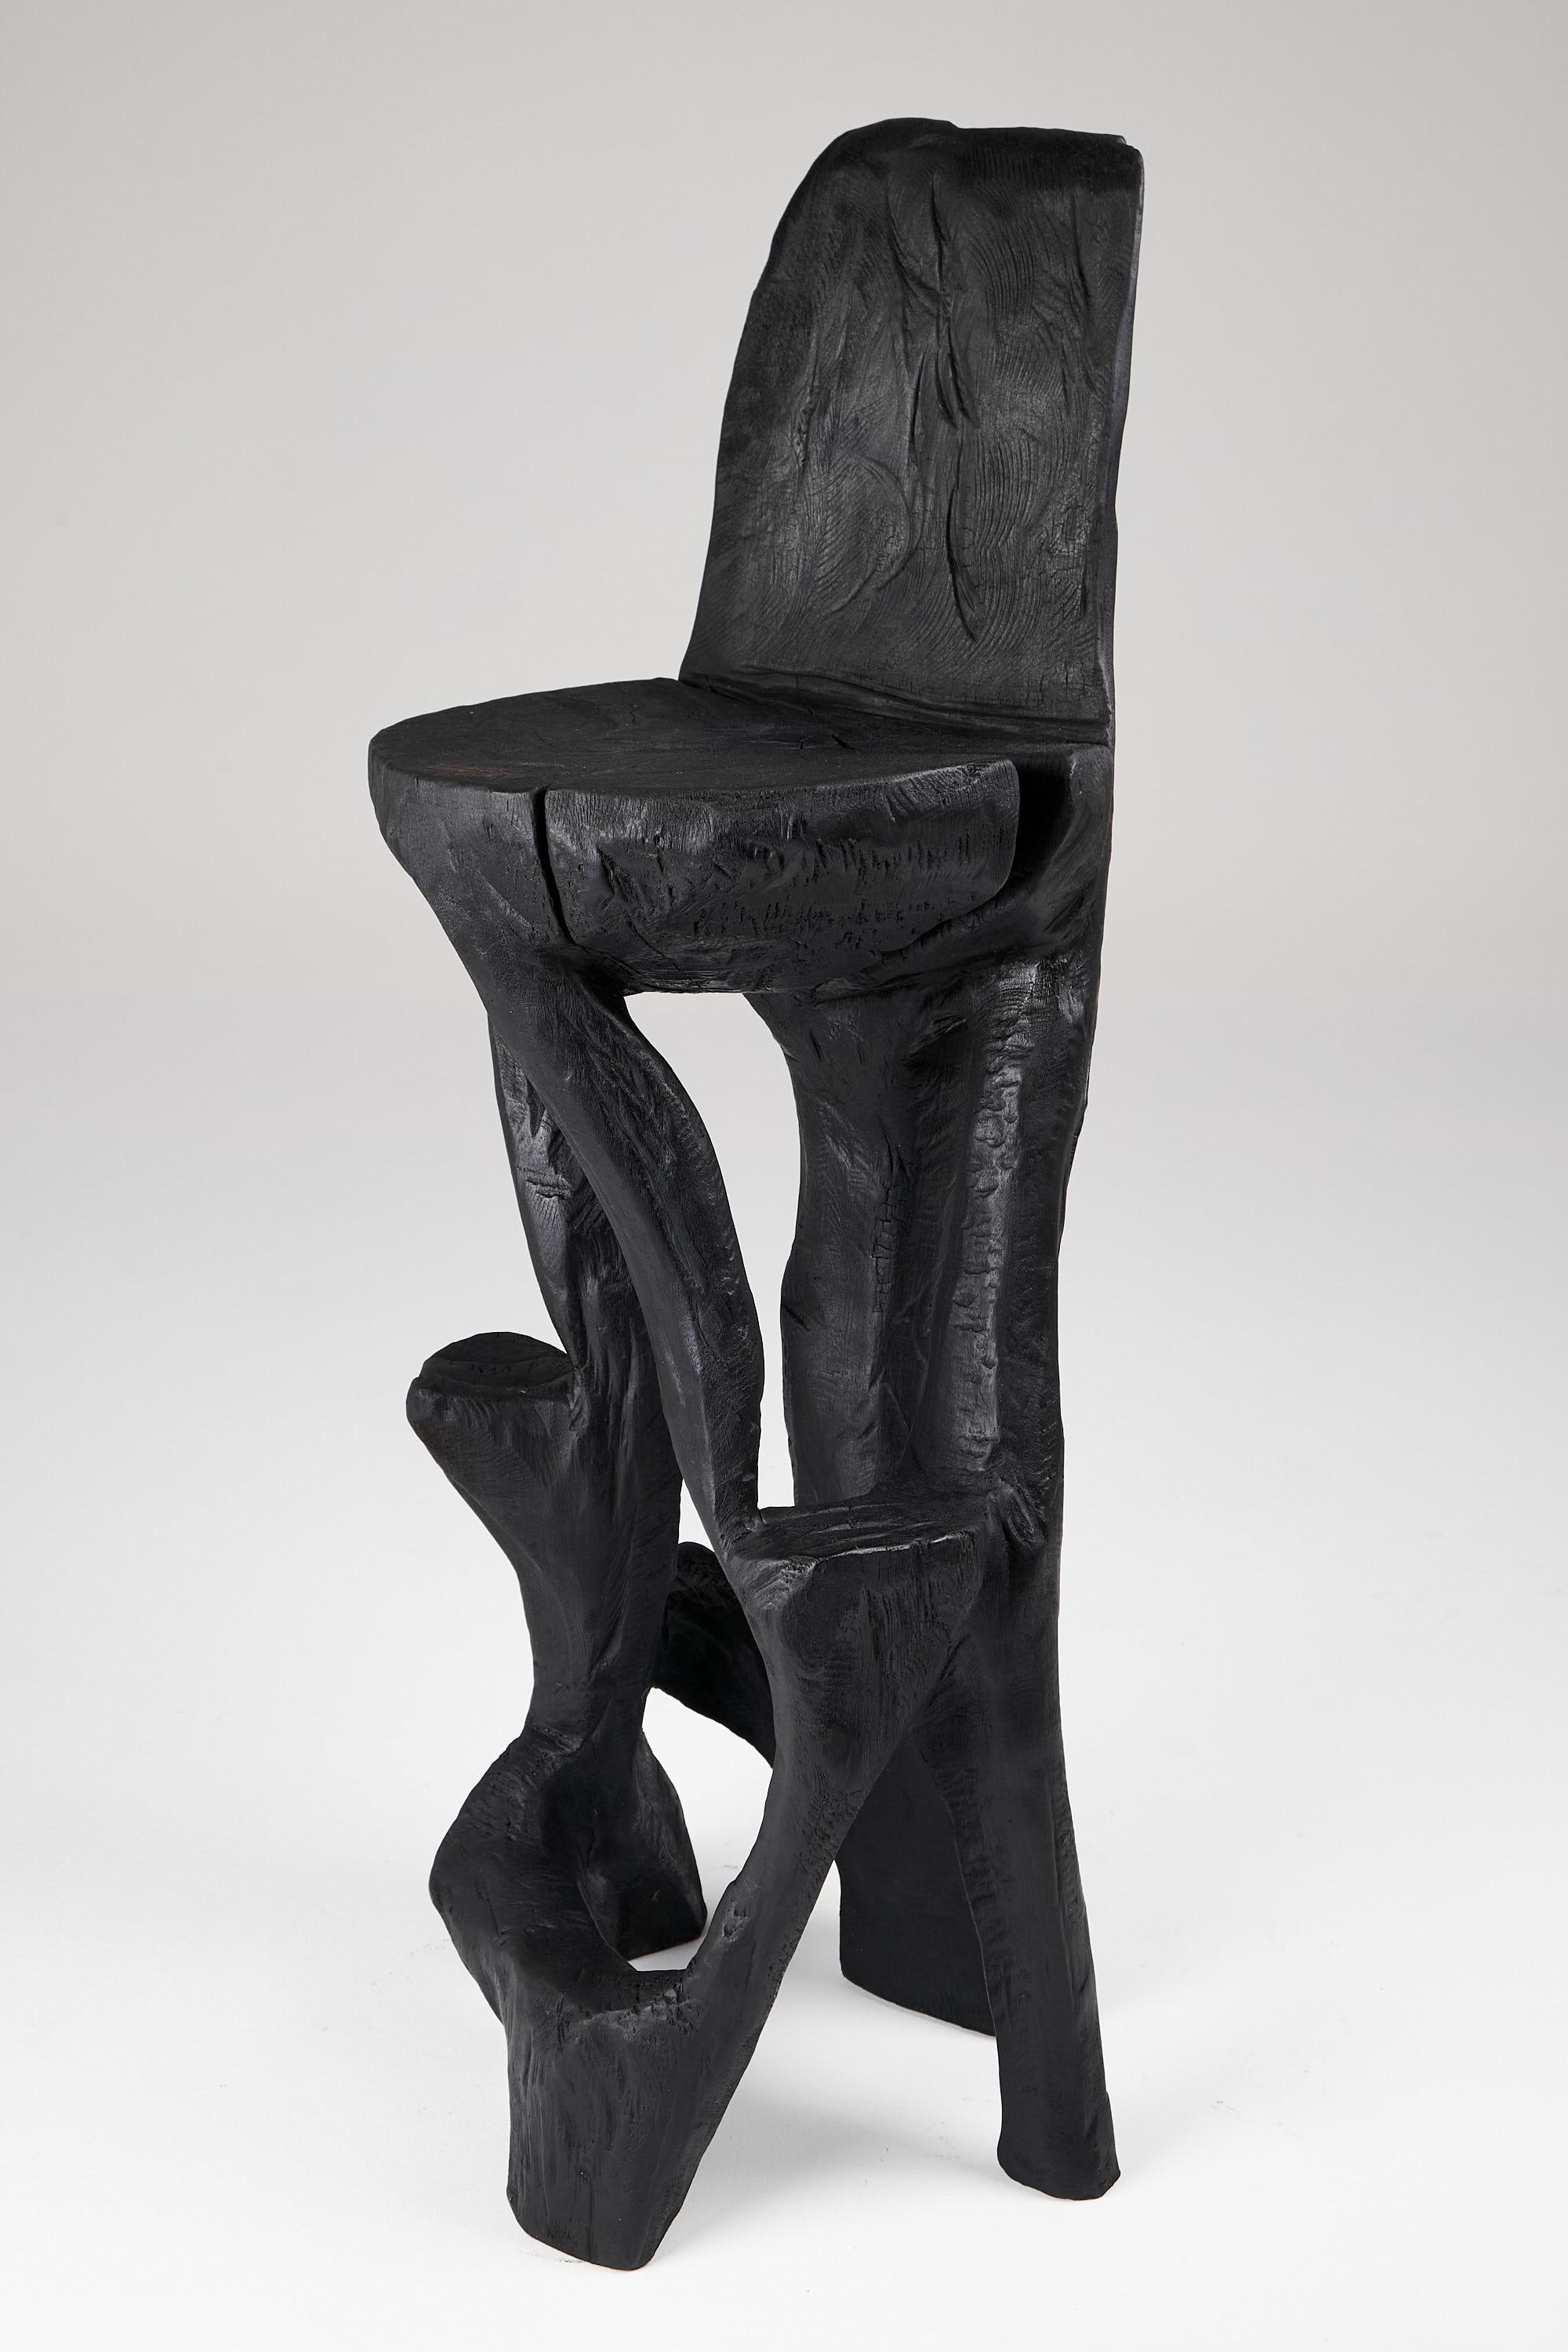 Makha, Solid Wood Sculptural Bar Chair, Original Contemporary Design, Logniture For Sale 6